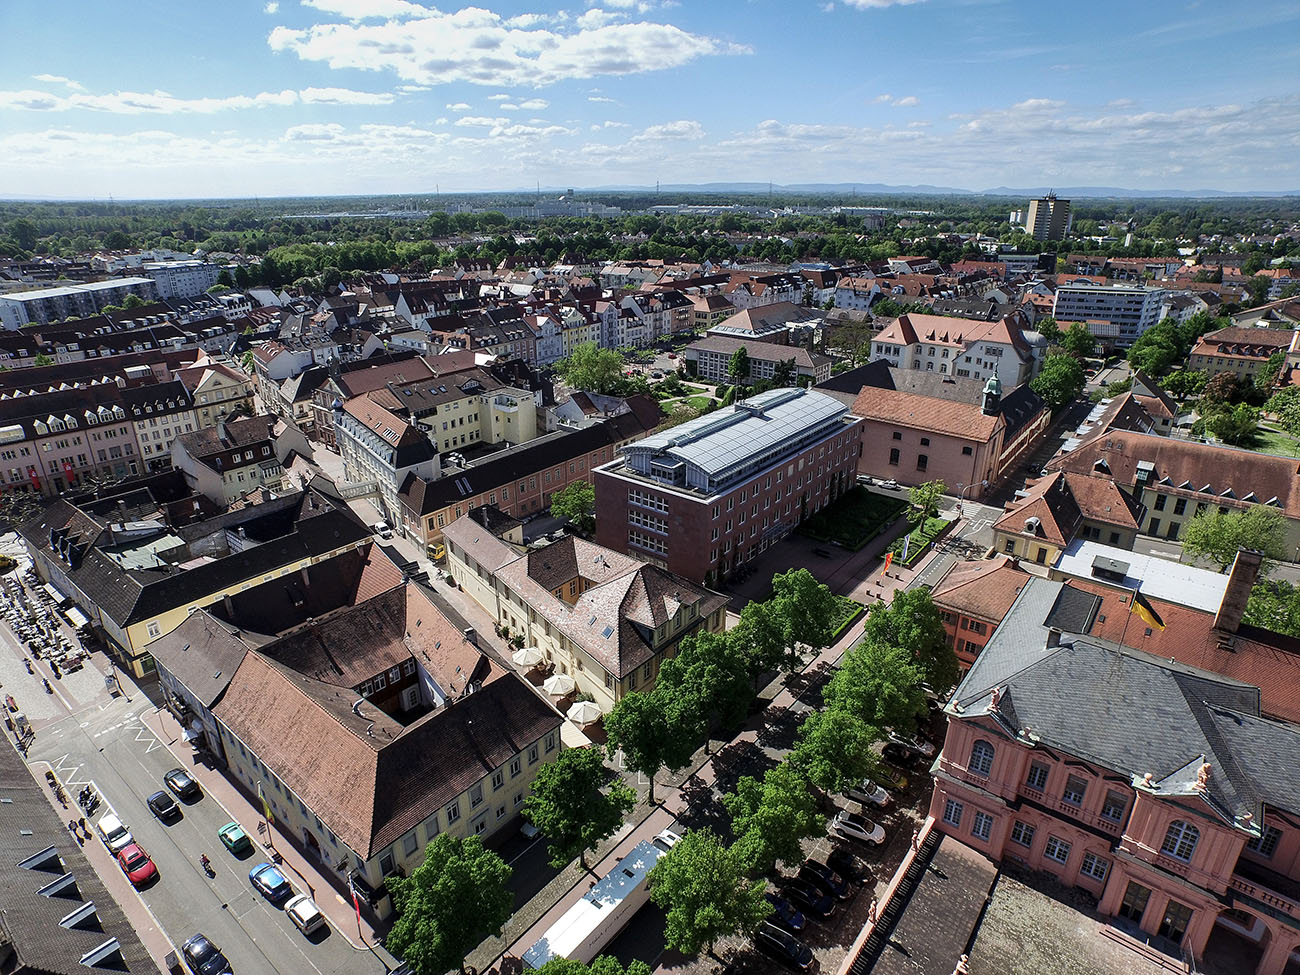 Aerial view of the town of Rastatt